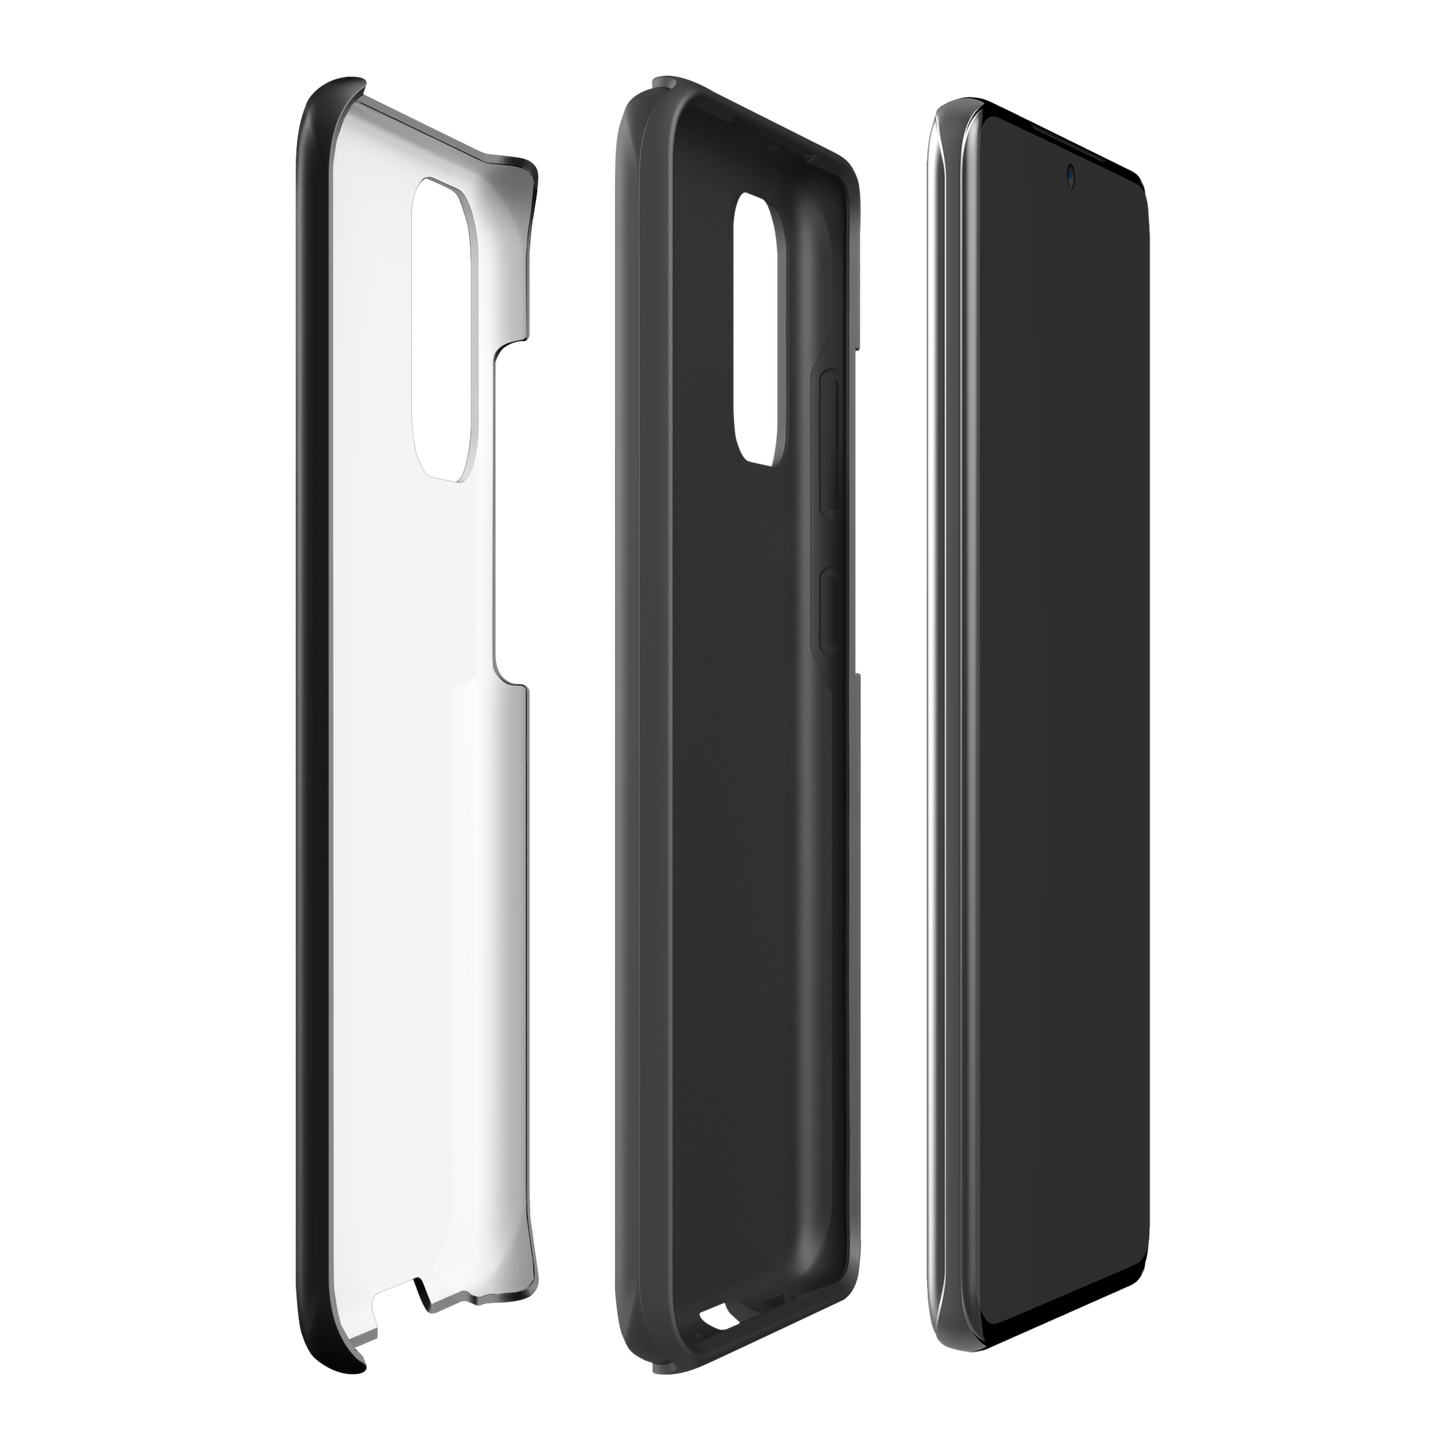 The Godfather Coreleone Crest Tough Phone Case - Samsung